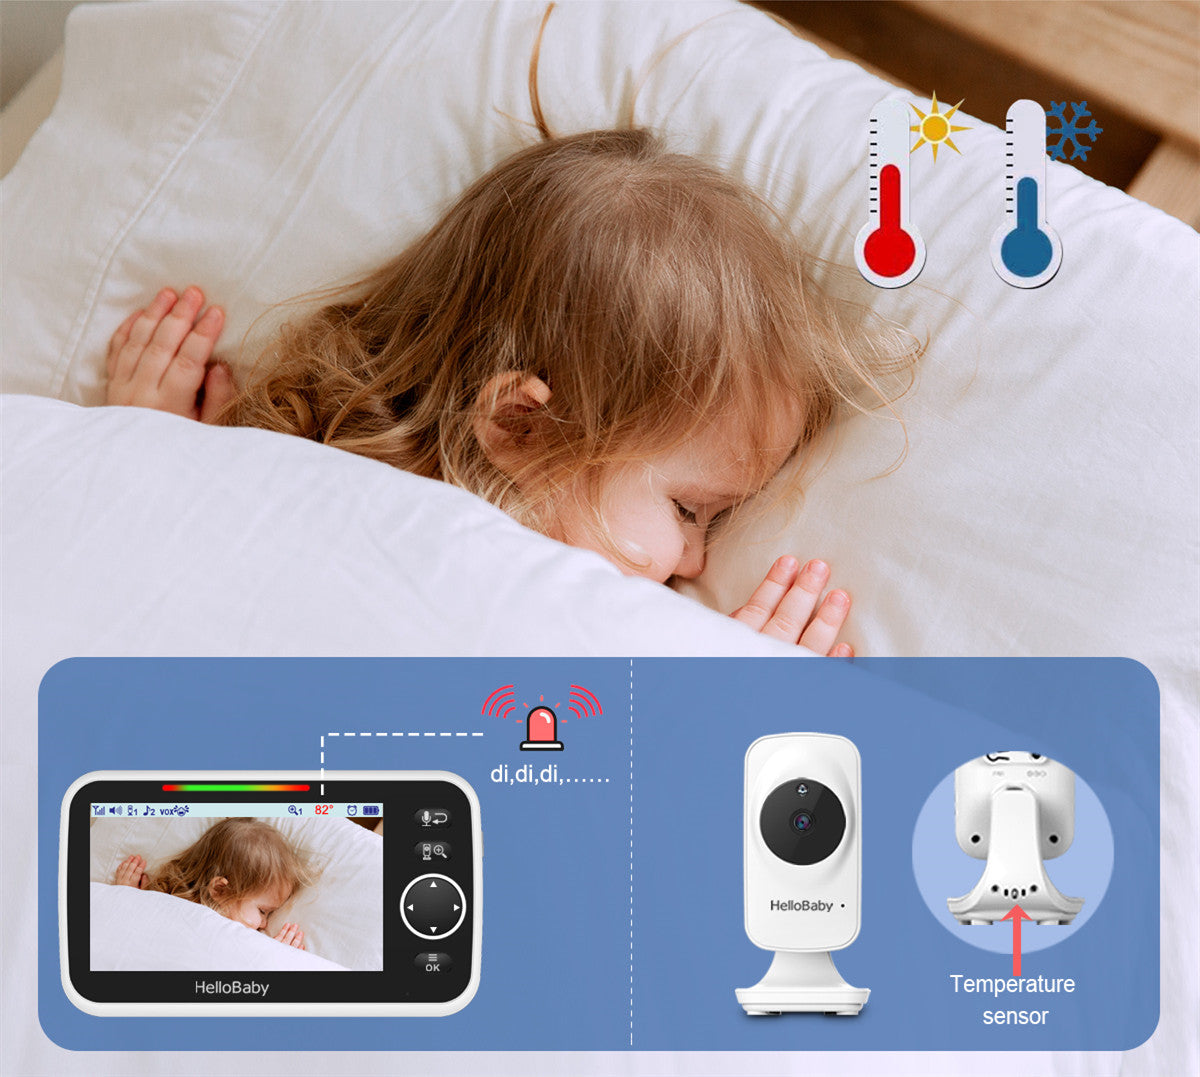 HelloBaby baby monitor camera with temperature sensor